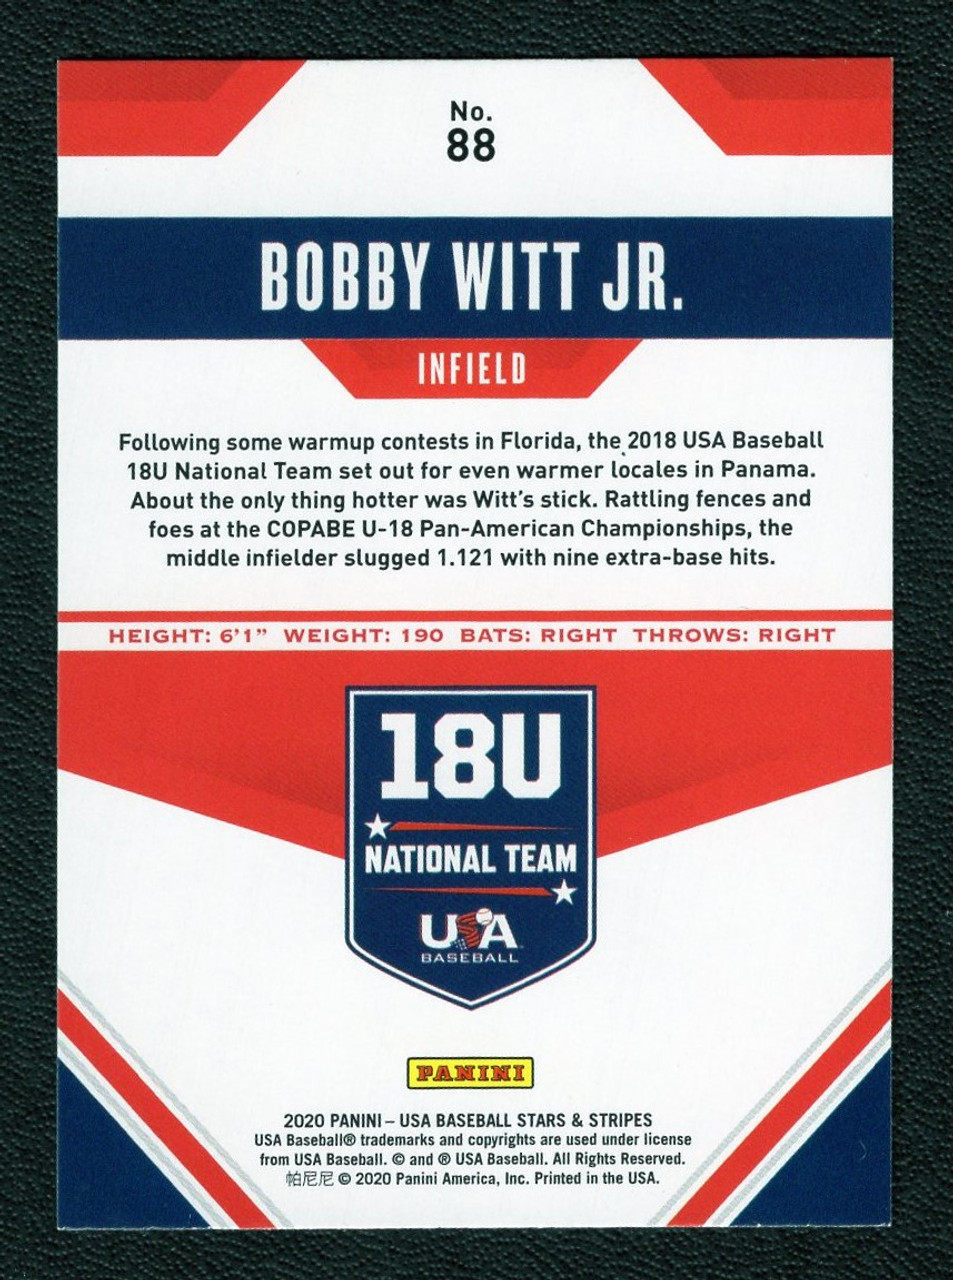 2020 Panini Stars & Stripes #88 Bobby Witt Jr. 18U National Team (#2)